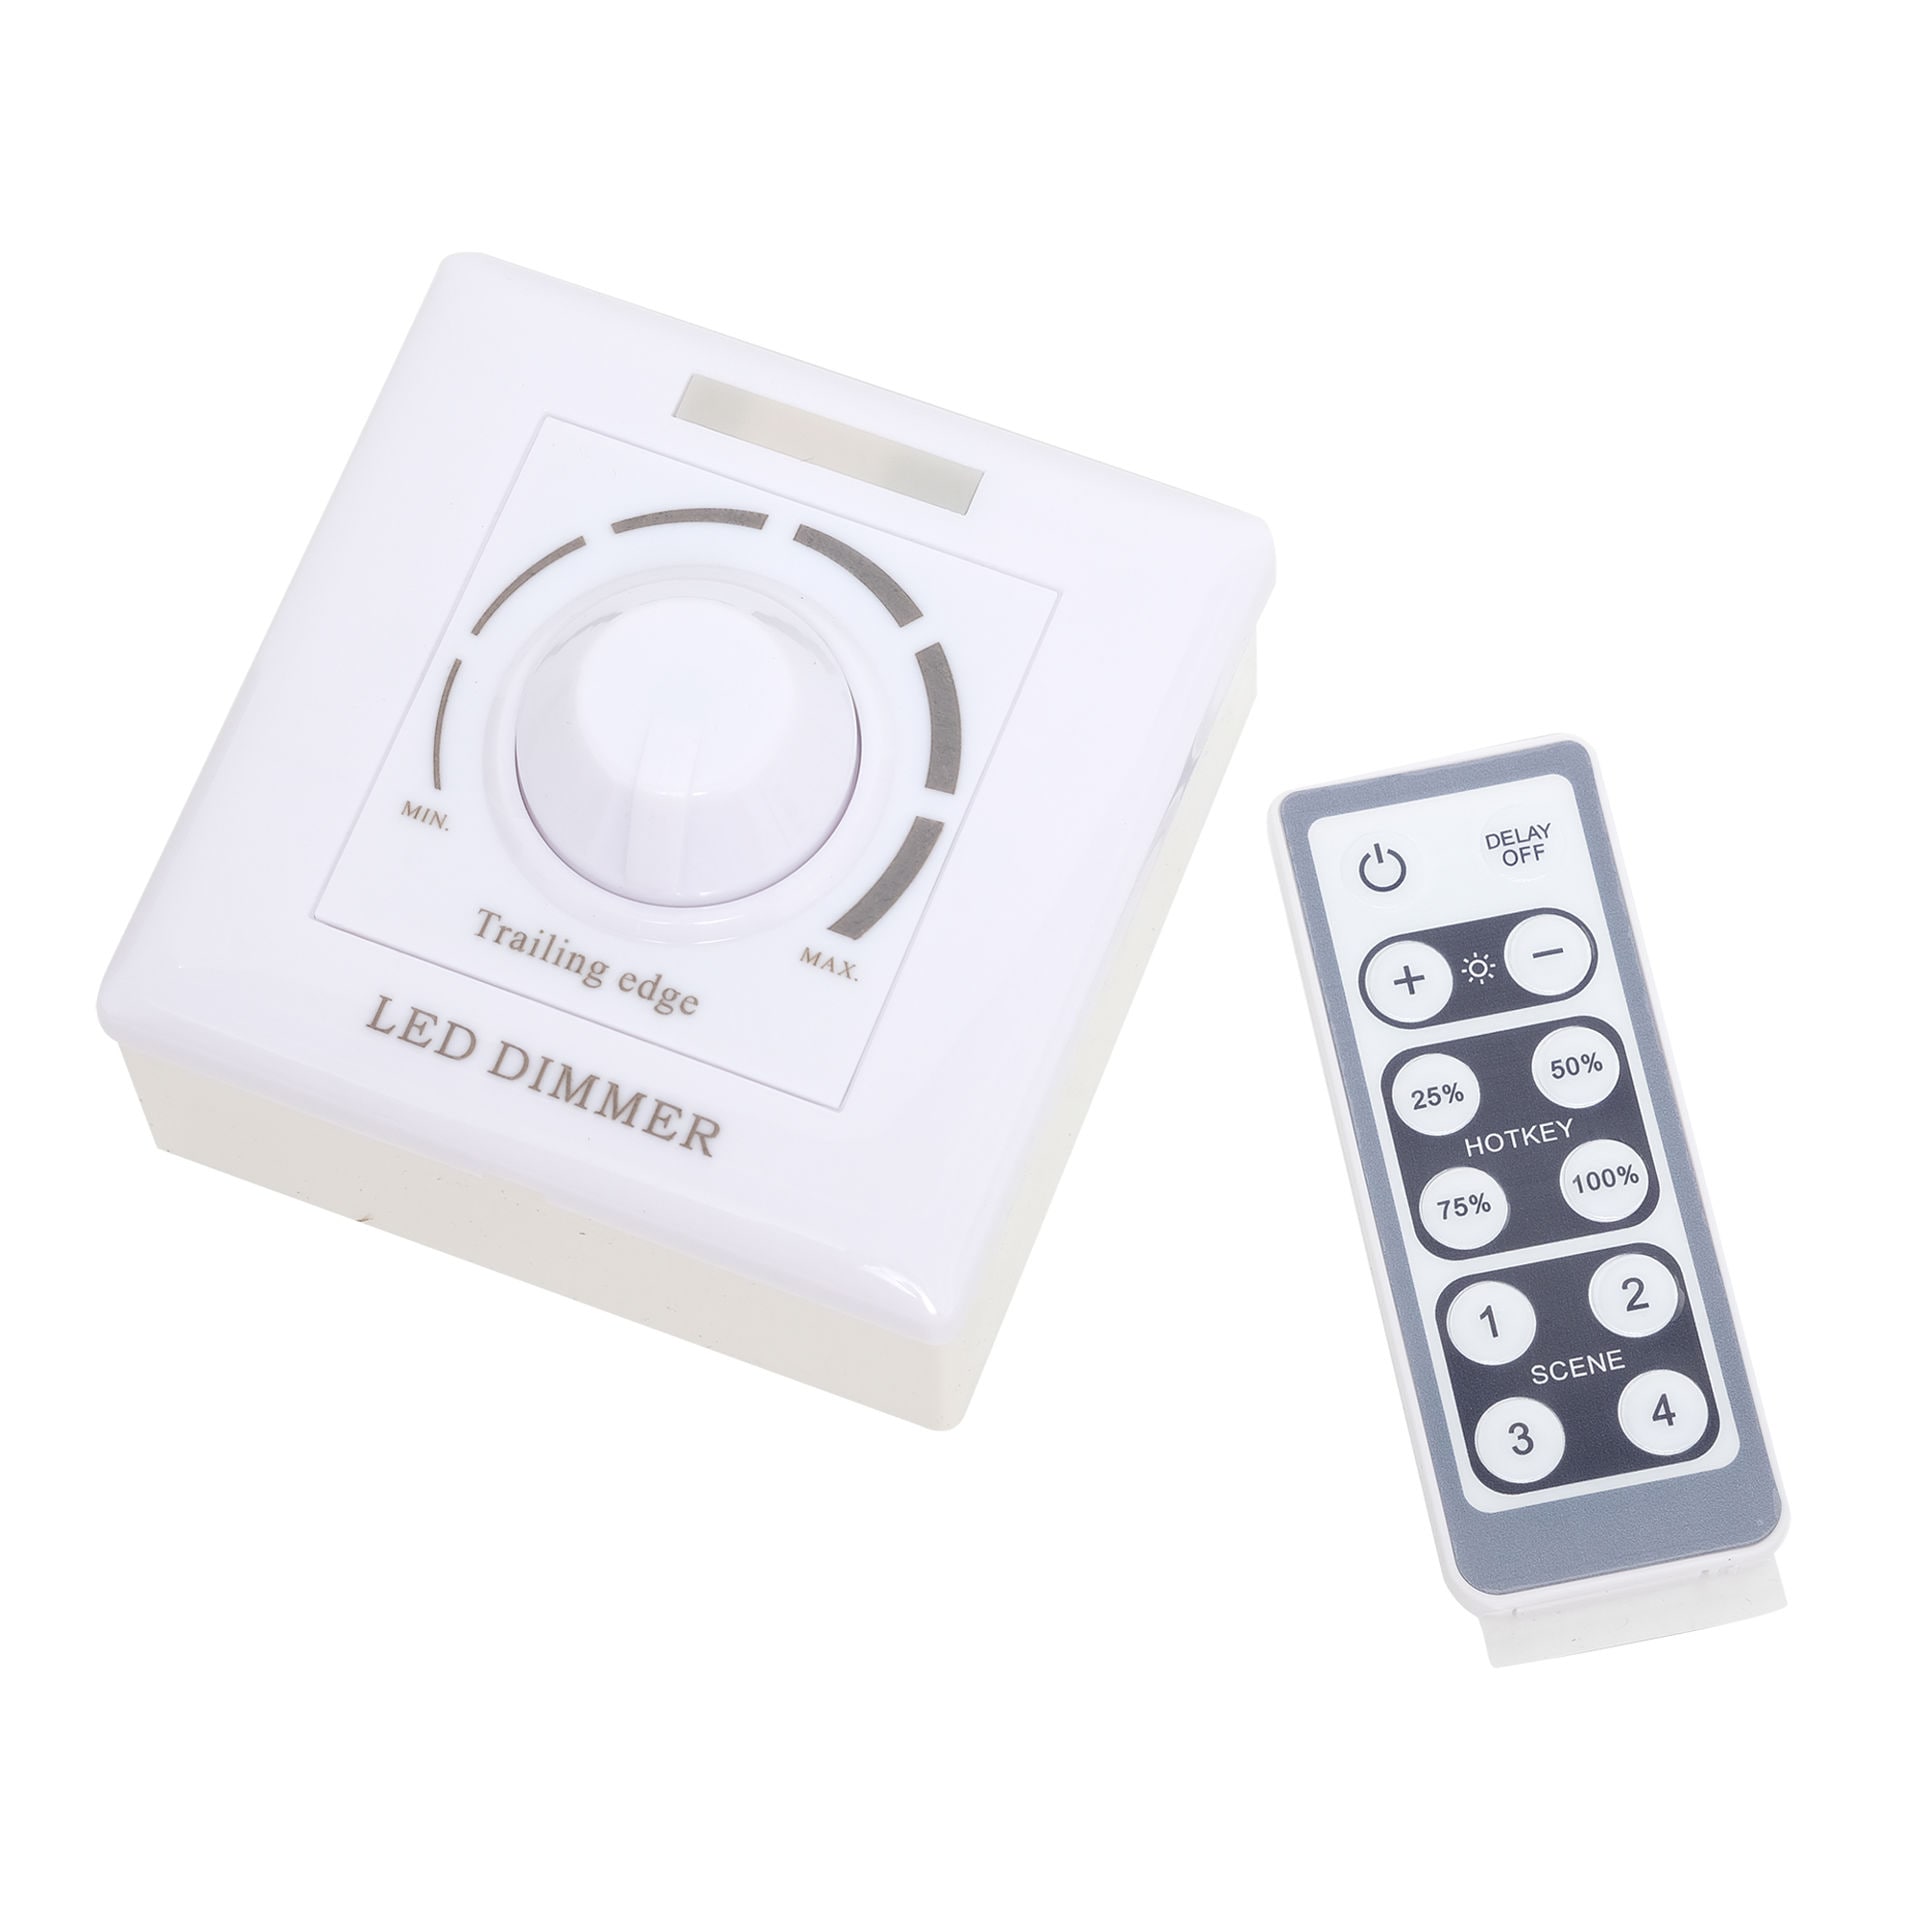 Generic Thinkbee Wireless Lights Switch Kit, No Wiring Mini Remote